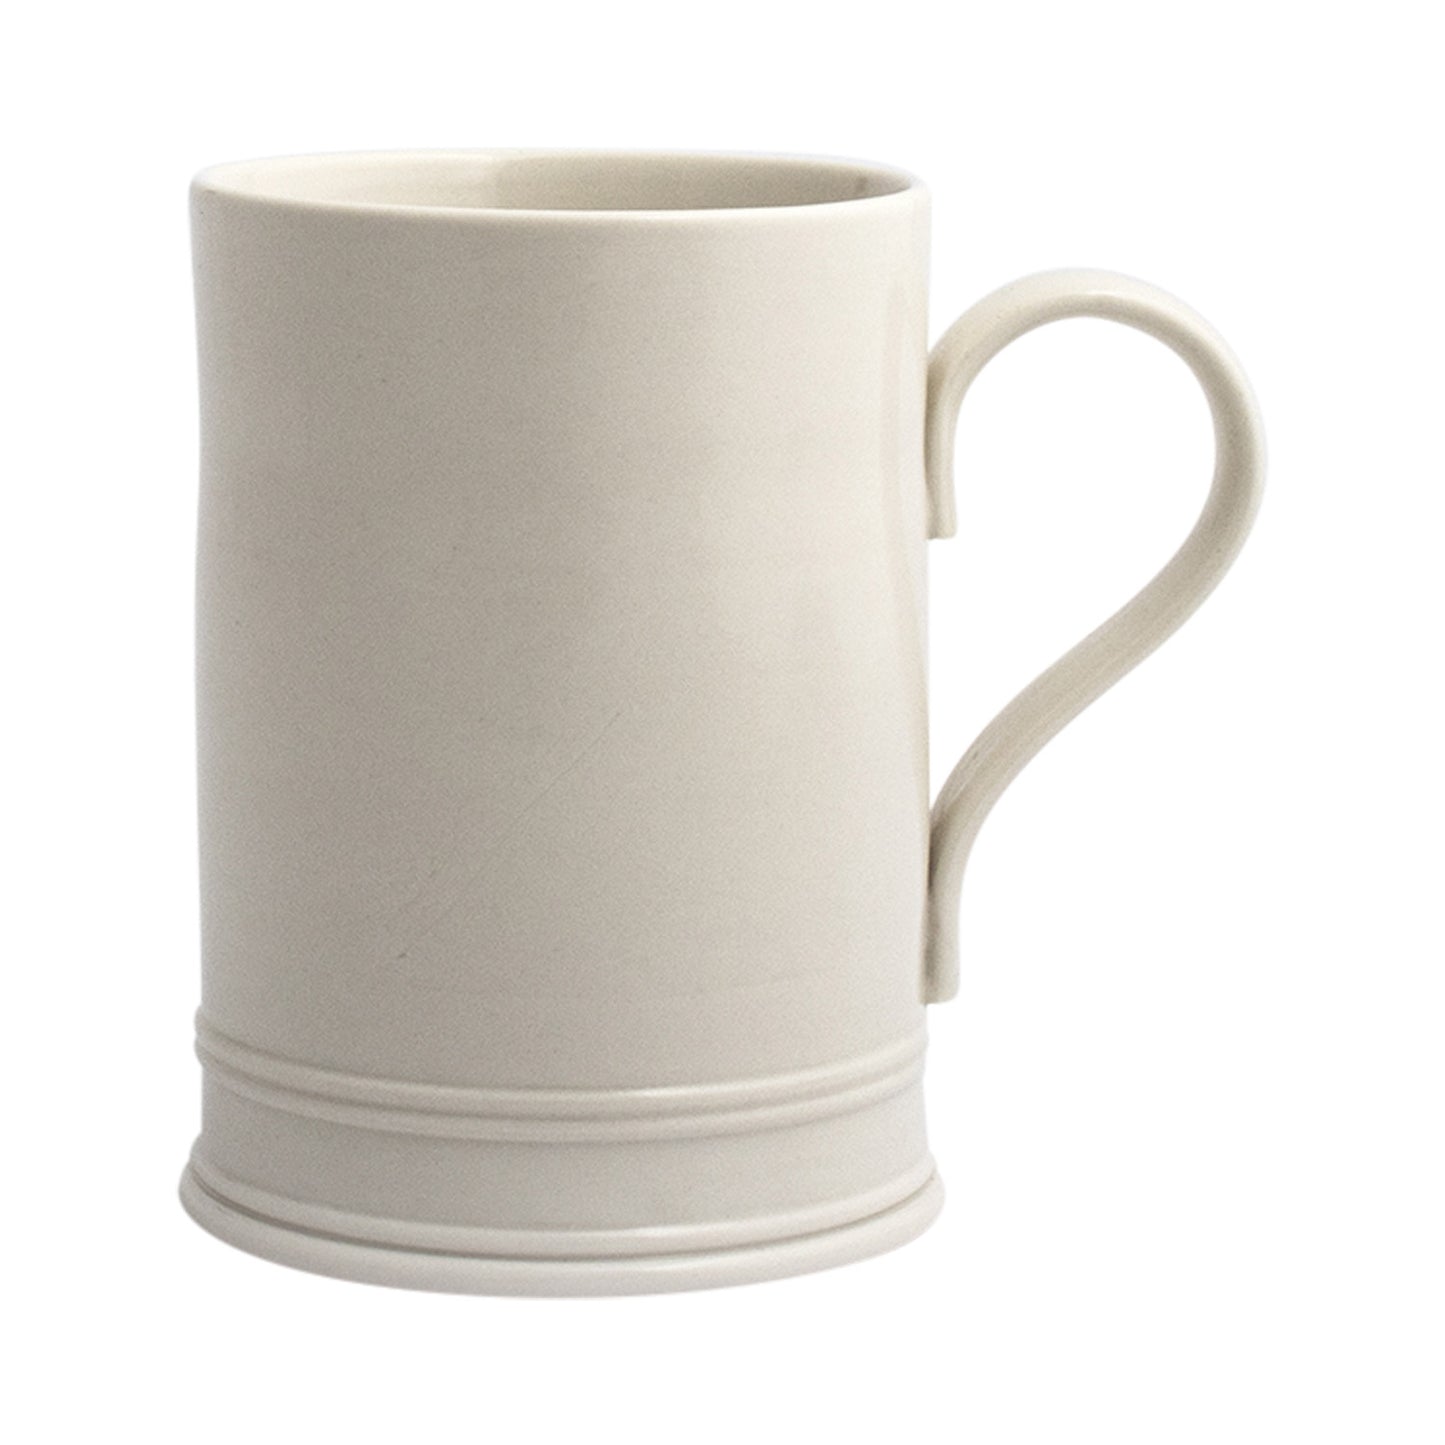 Classical Creamware Mug